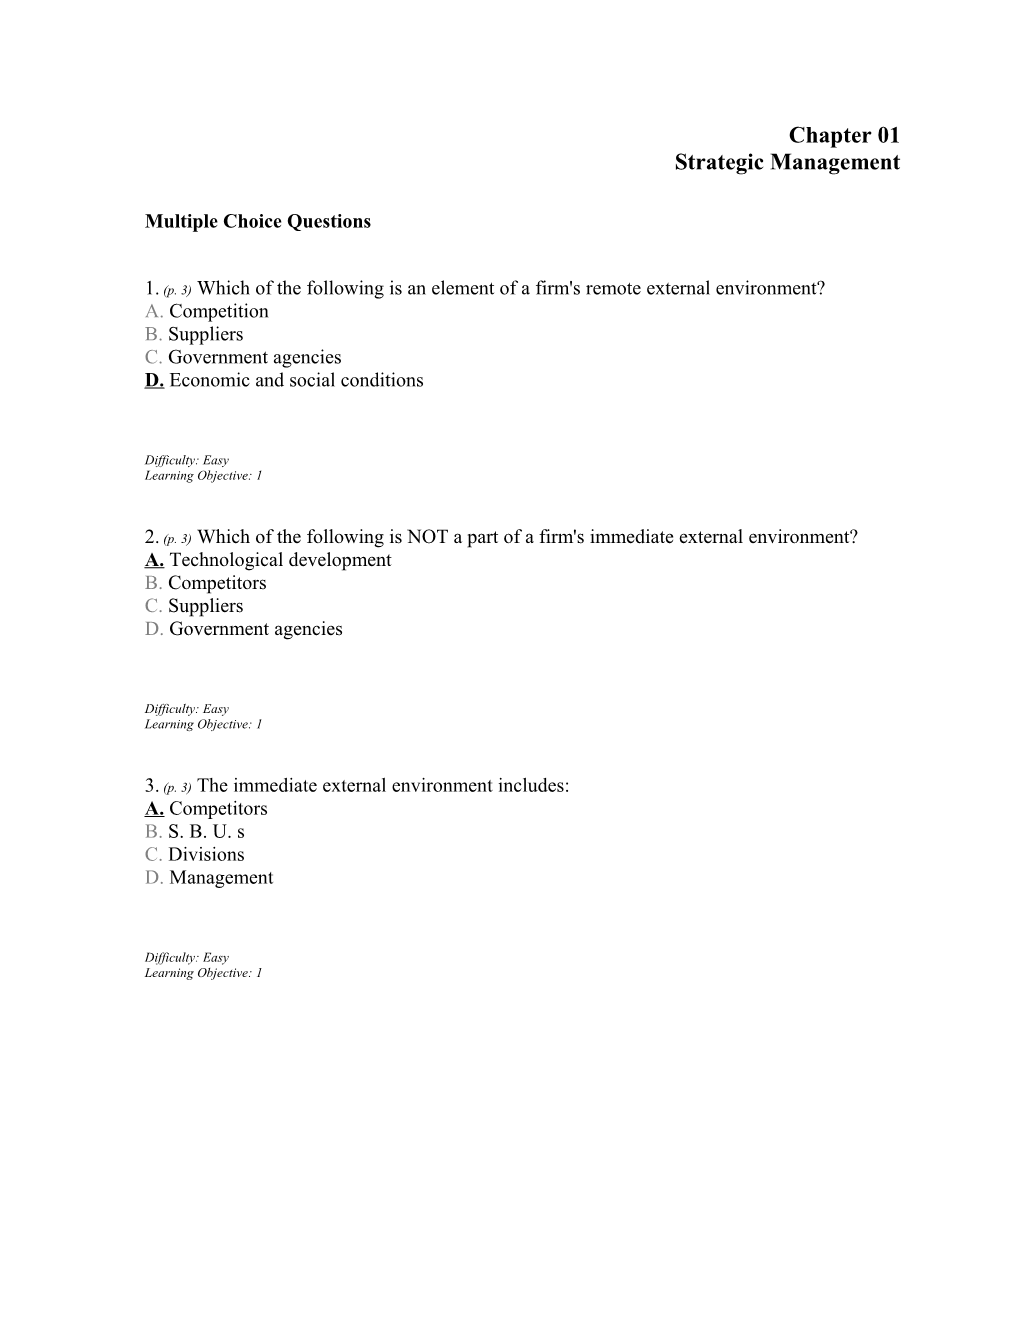 Chapter 01 Strategic Management